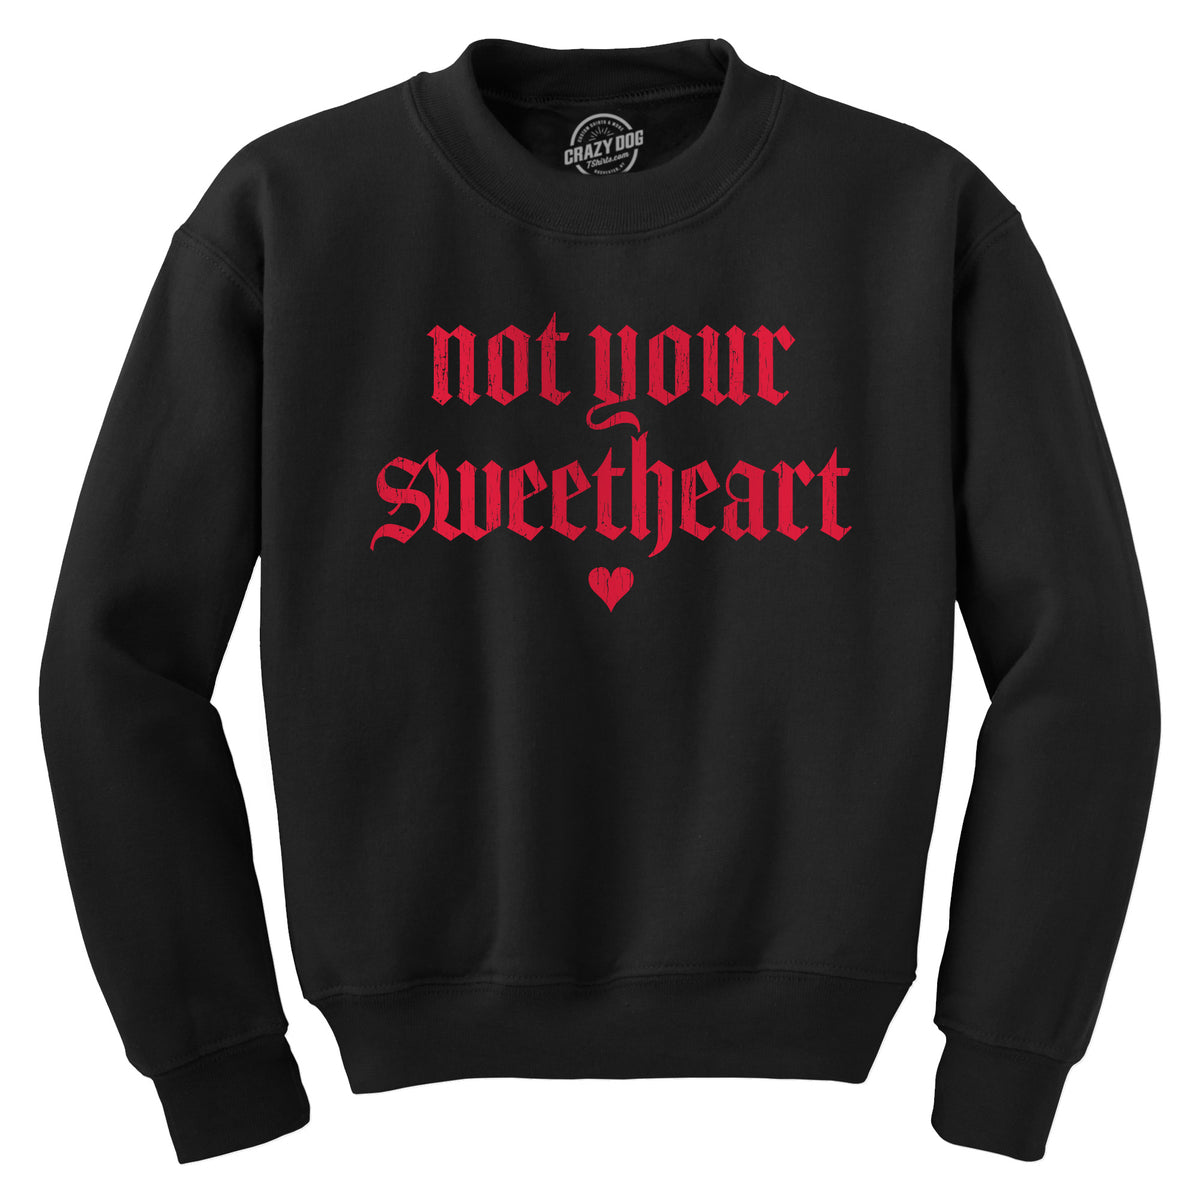 Funny Black - Not Your Sweatheart Not Your Sweatheart Sweatshirt Nerdy Valentine&#39;s Day Sarcastic Tee